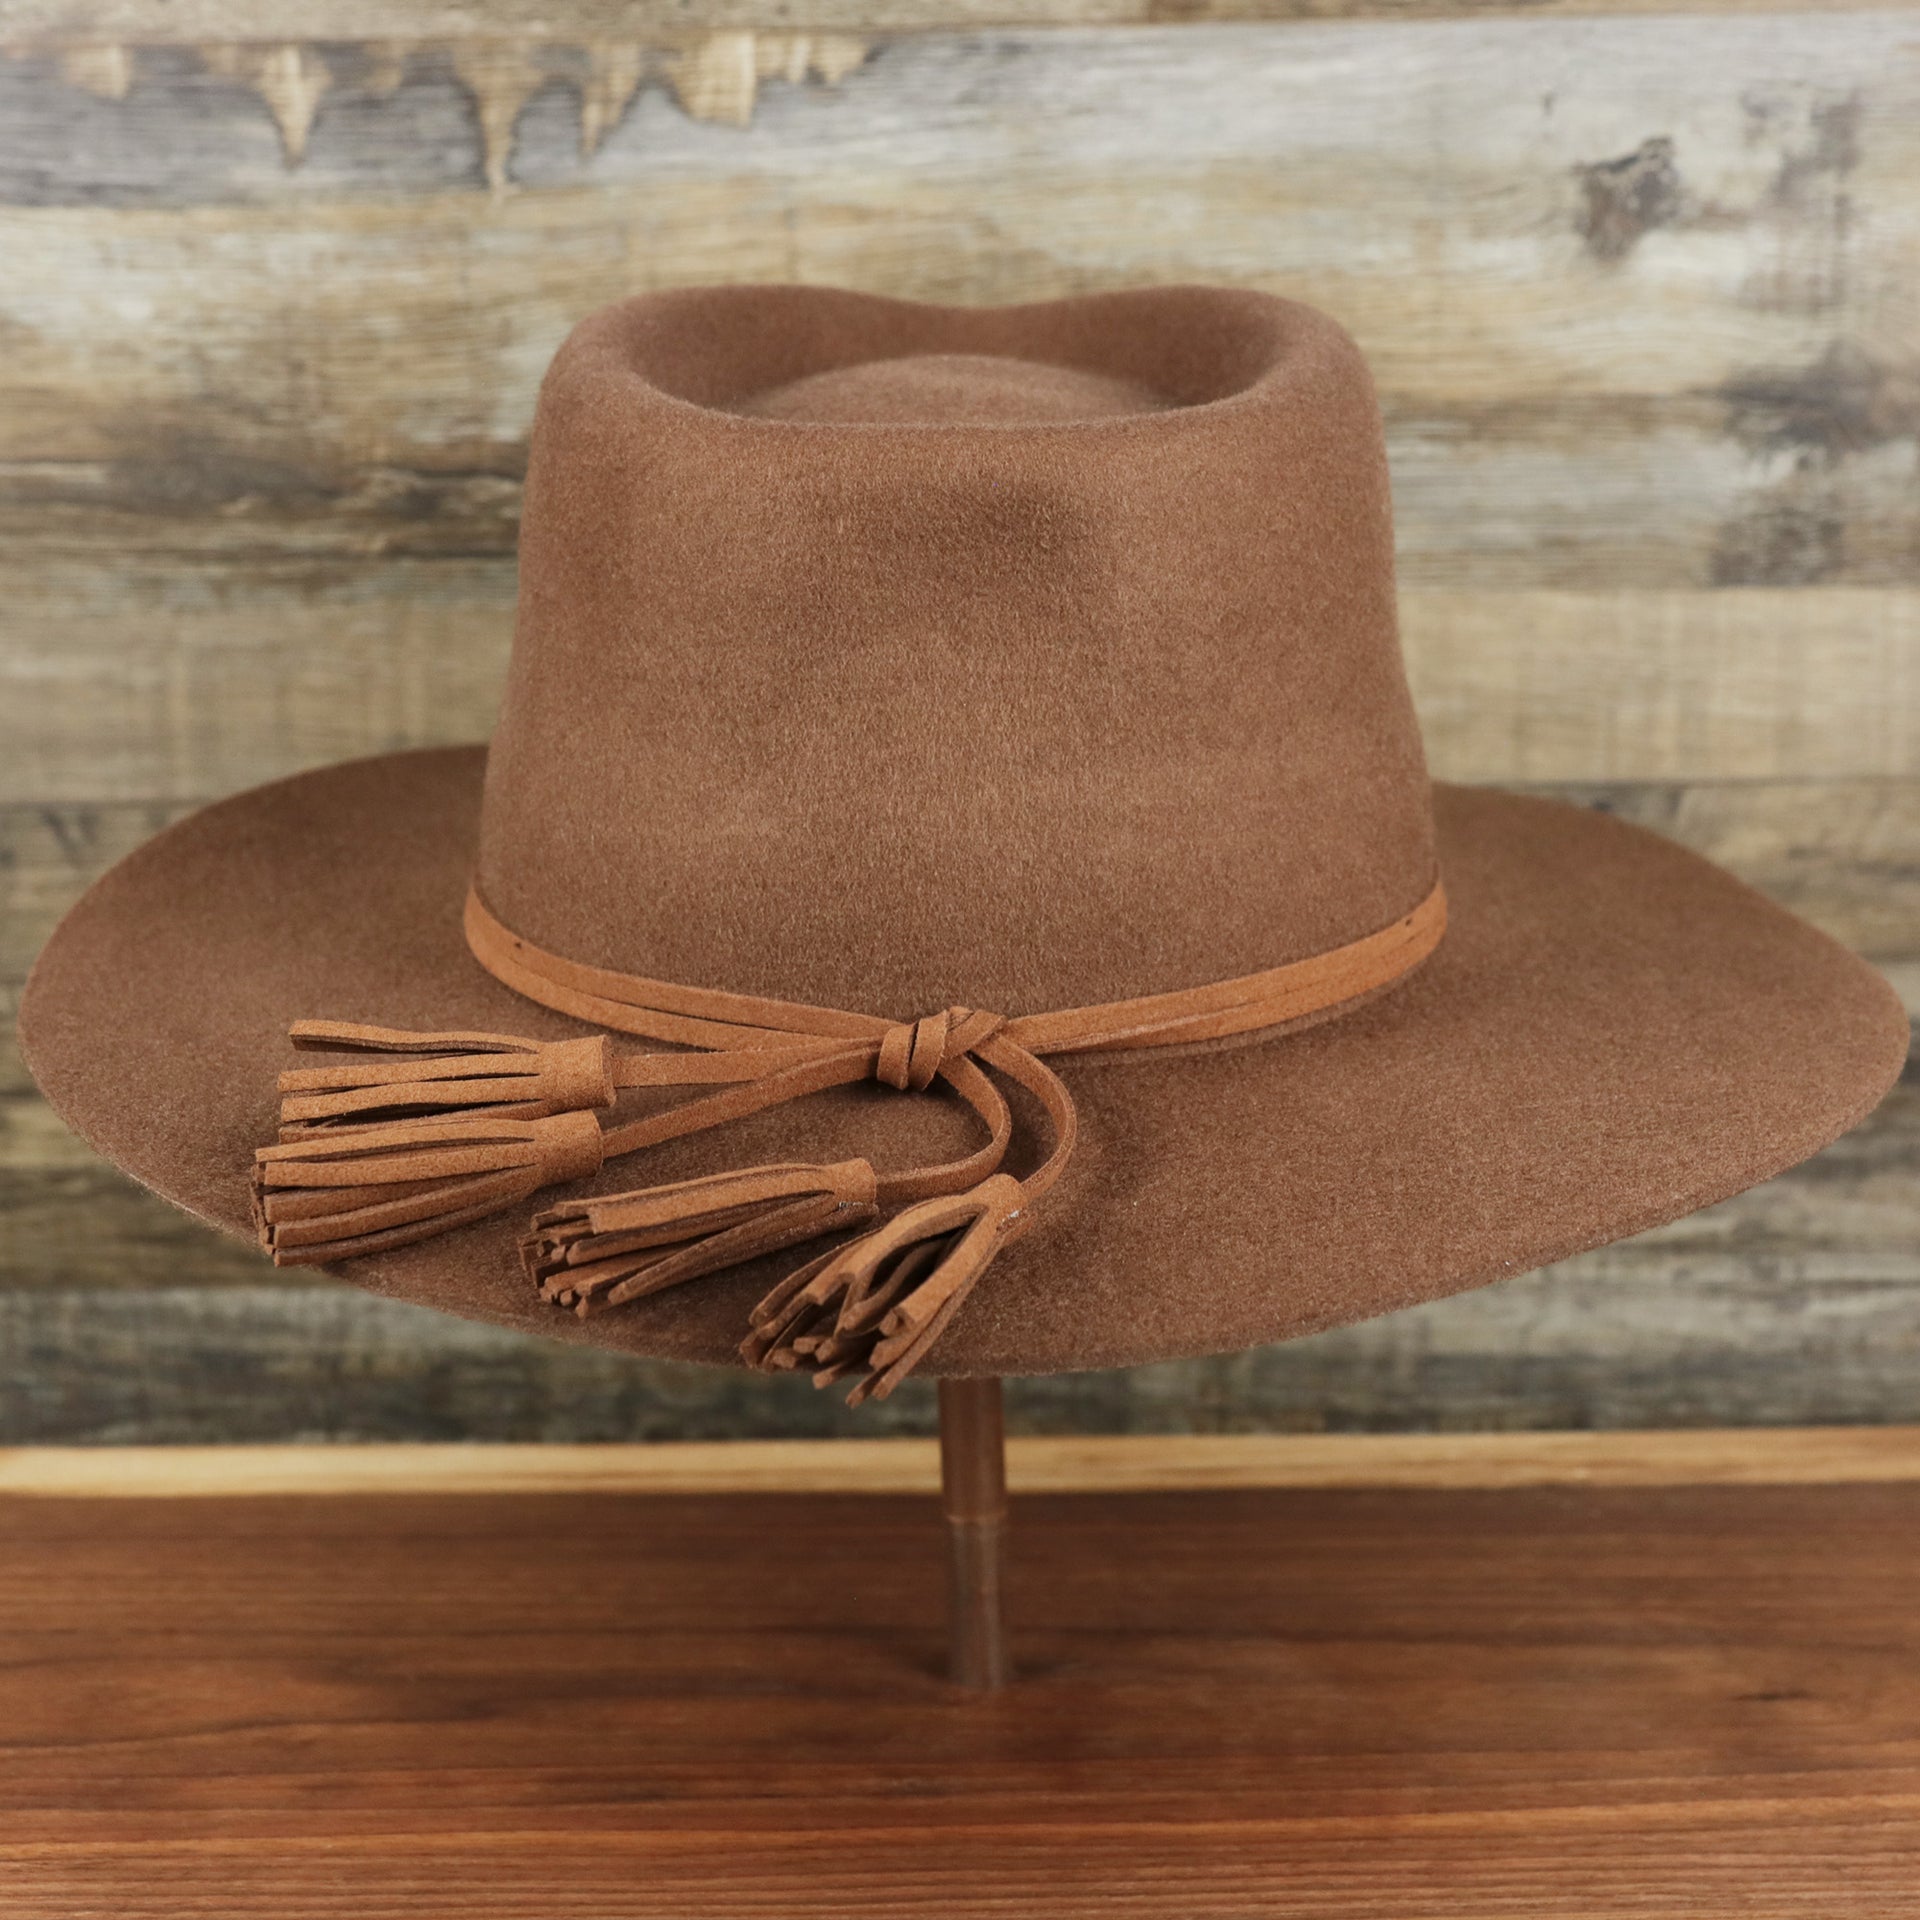 The backside of the Wide Brim Ribbon Edge Brown Fedora Hat with Black Silk Interior | Zertrue 100% Australian Wool